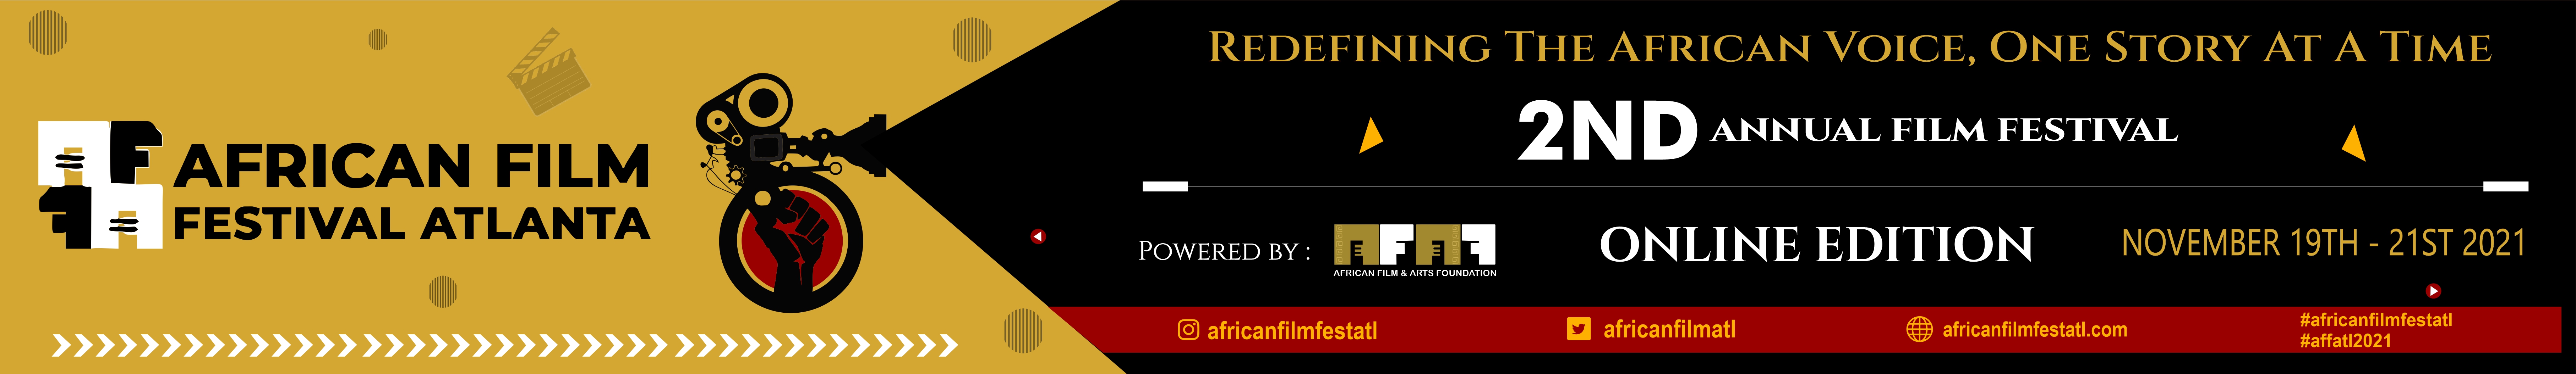 African Film Festival Atlanta 2021: Virtual Cinema